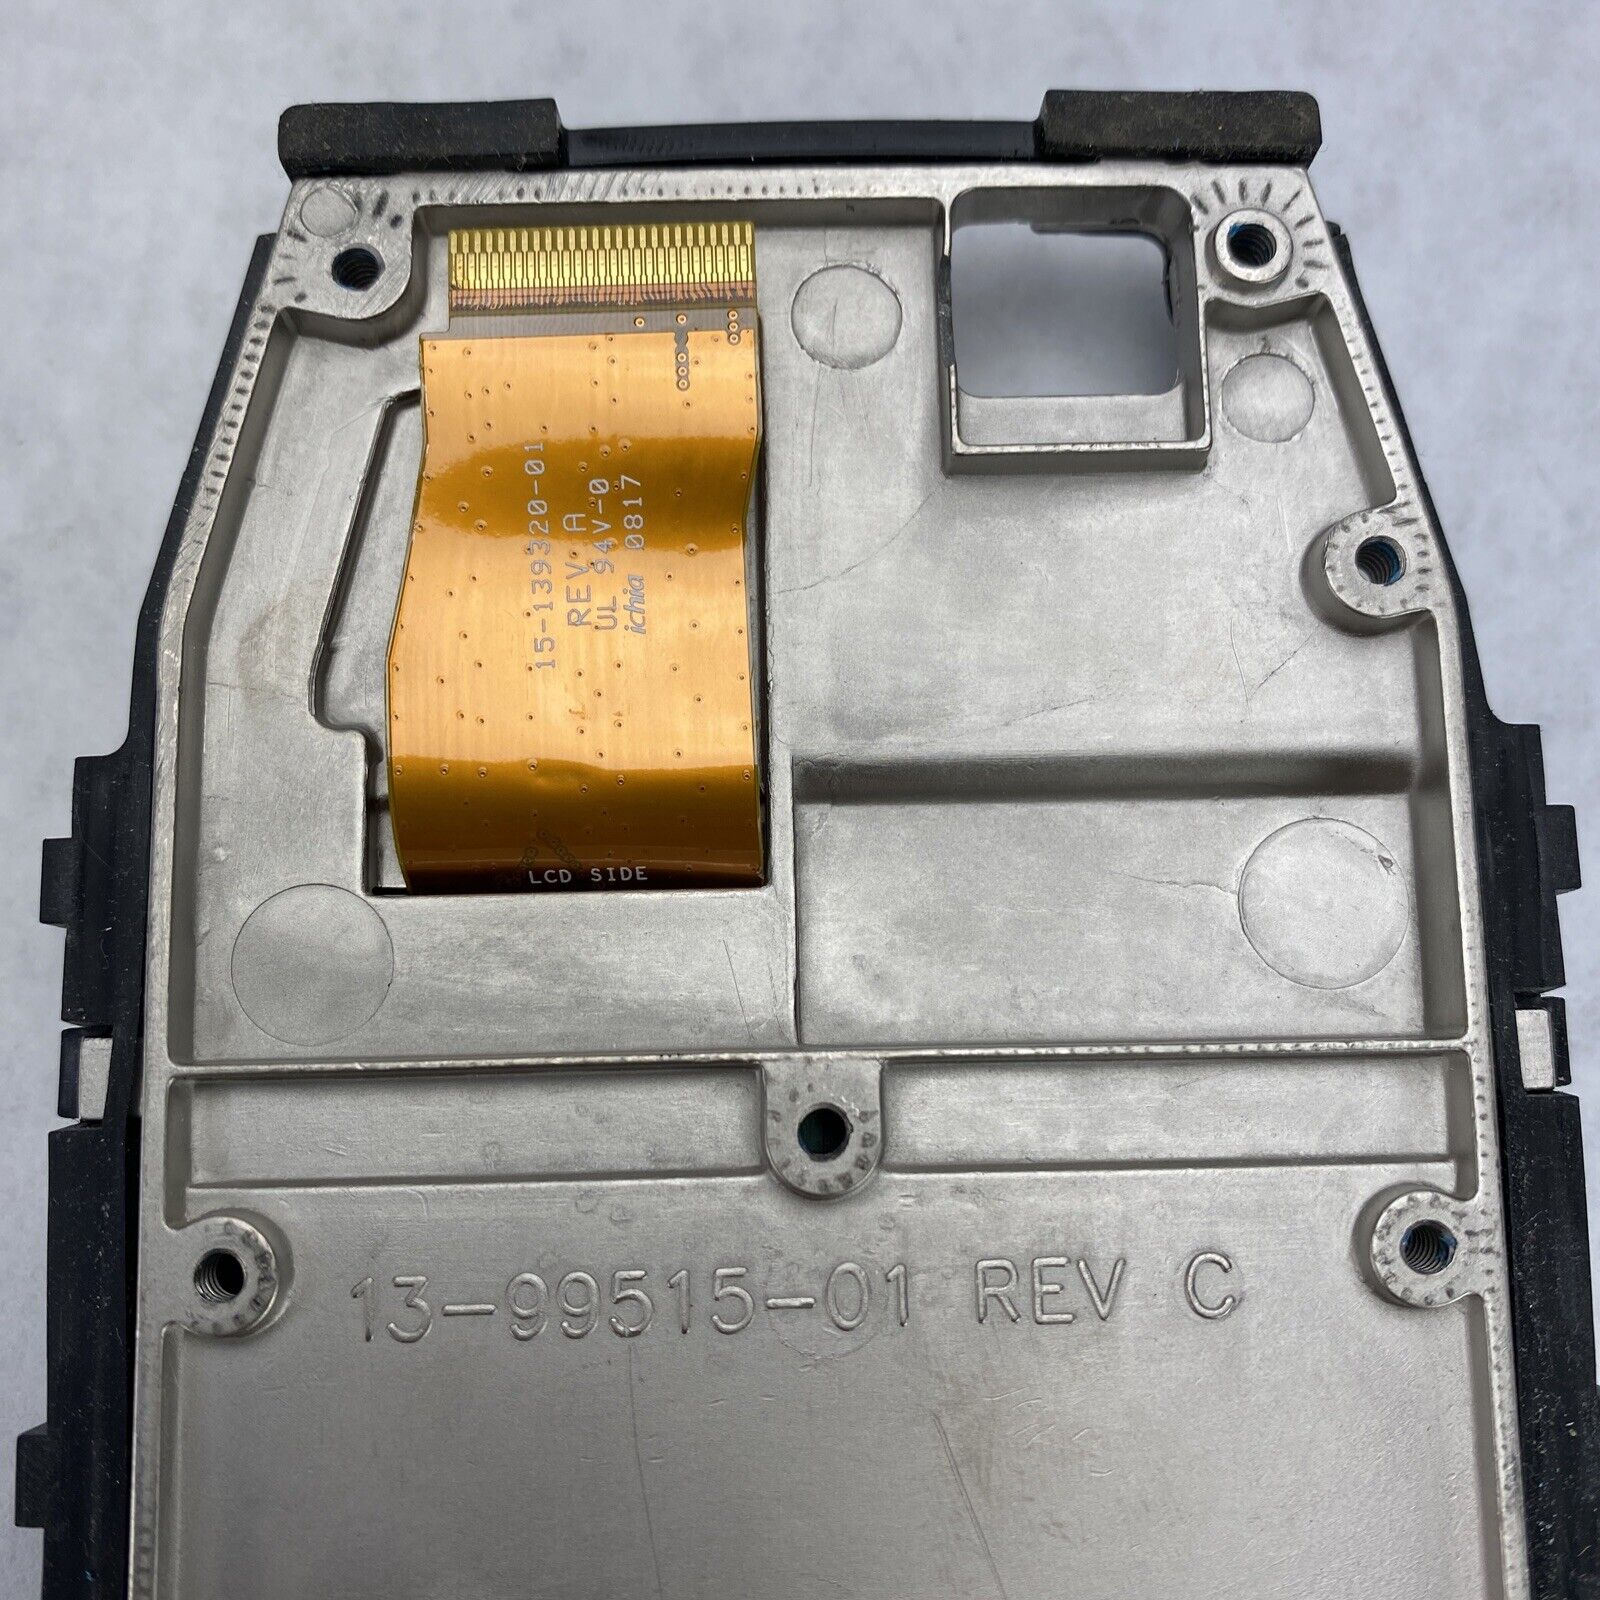 Symbol Motorola Frame 13-99515-01 for MC9090 MC9190 Barcode Scanner